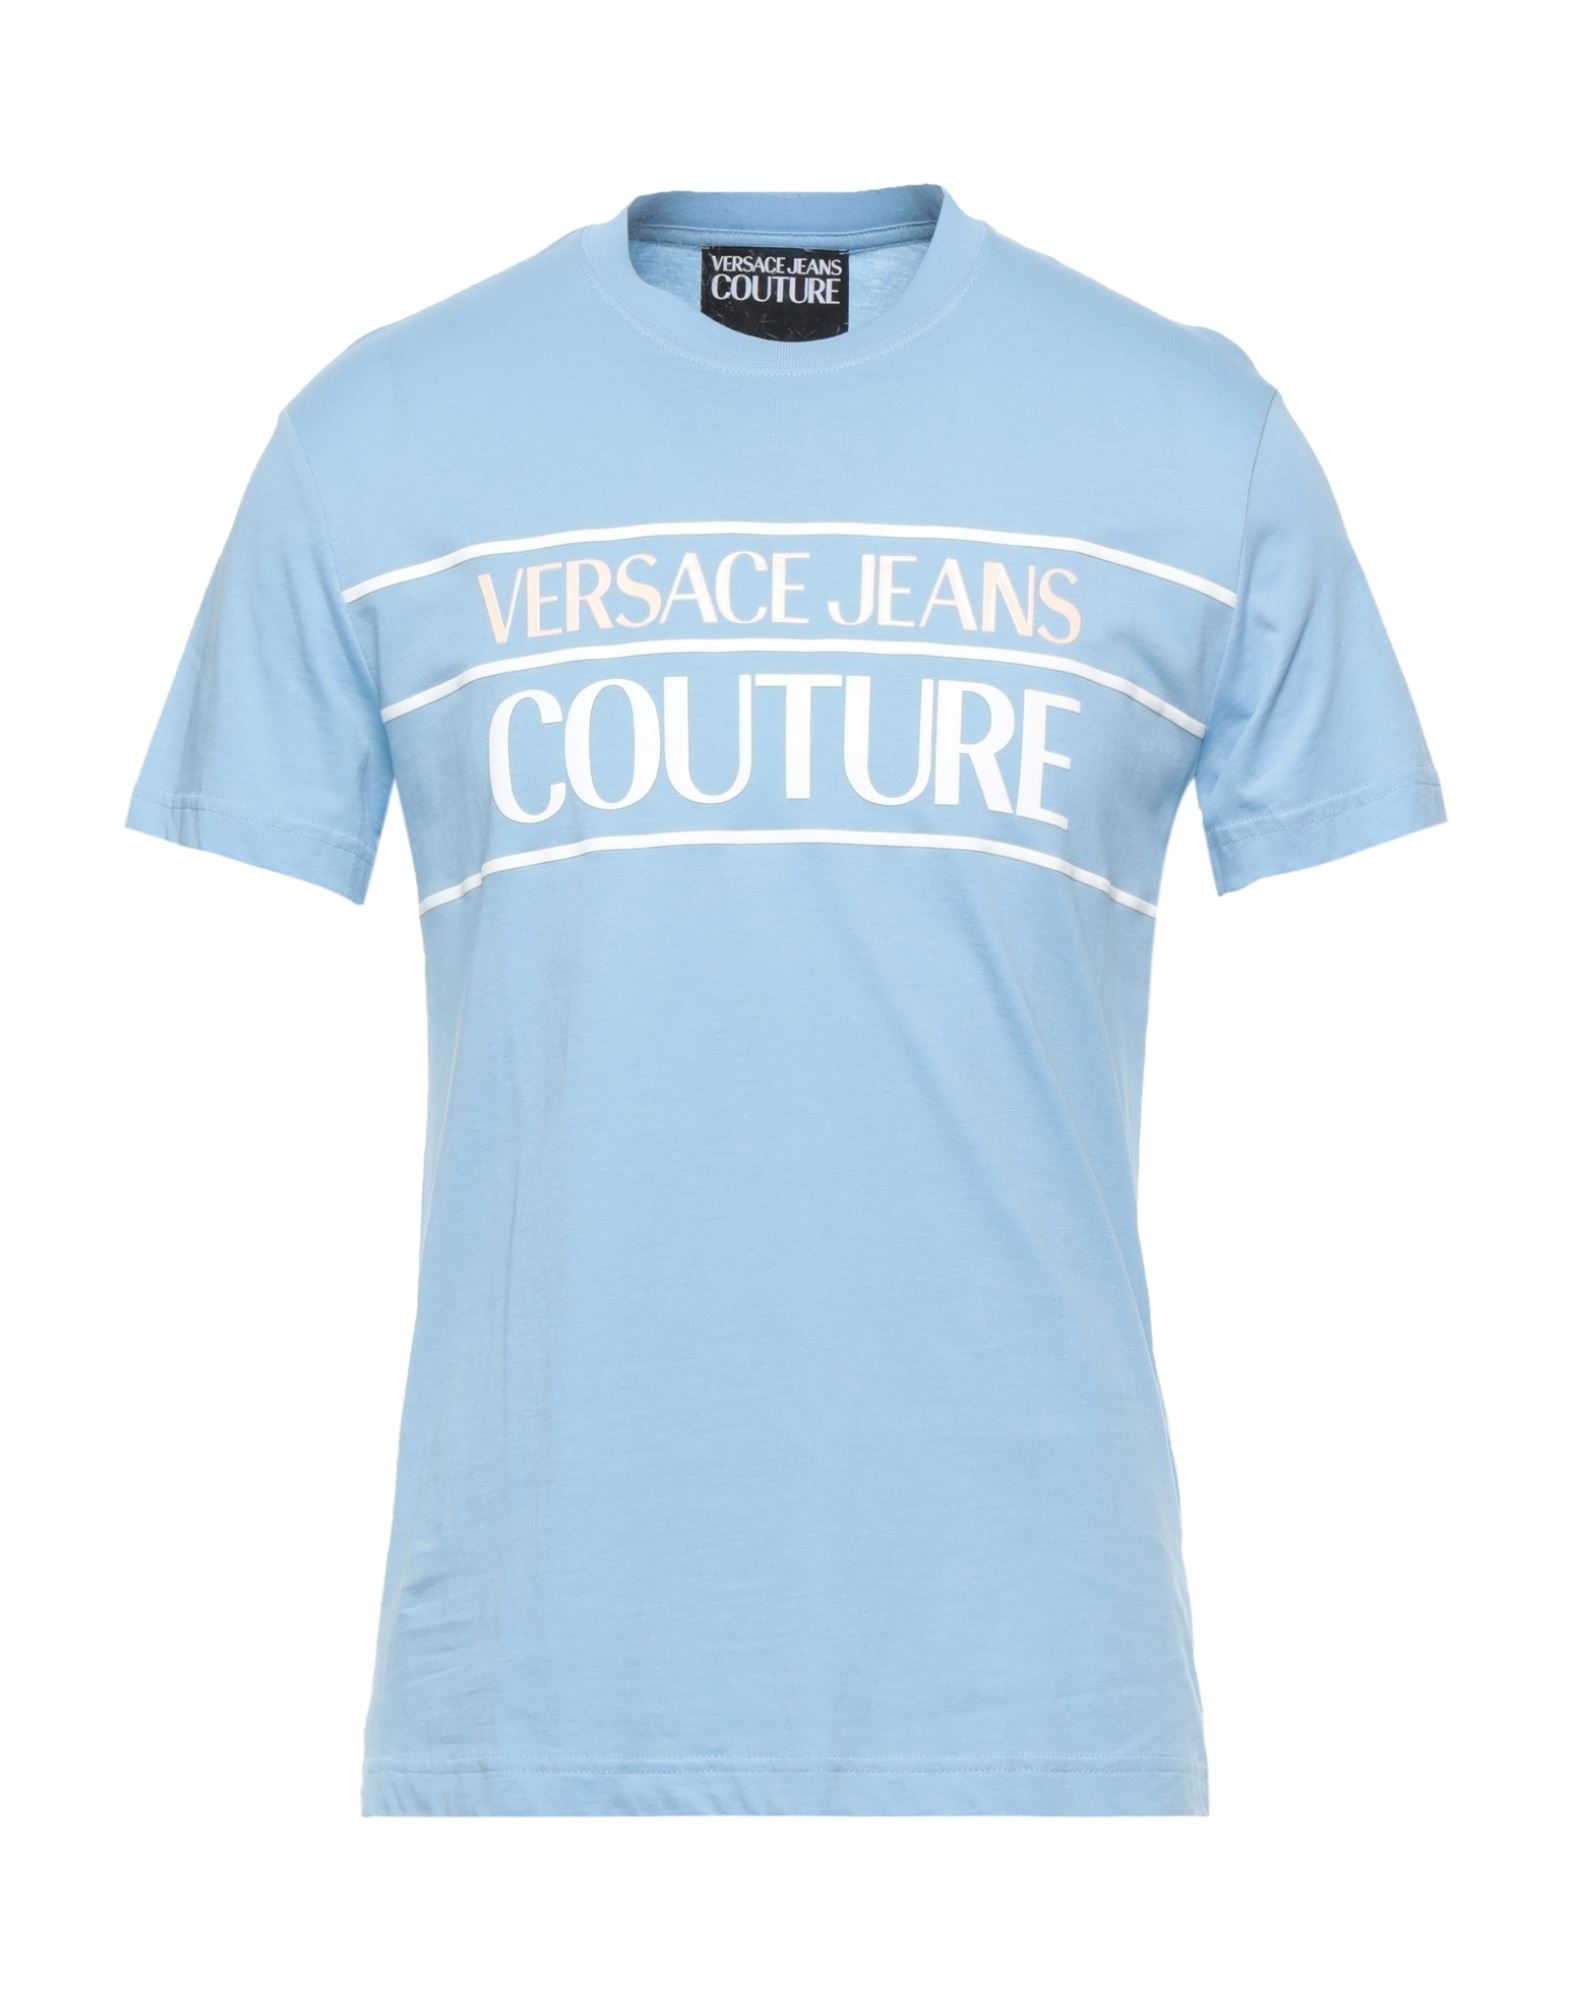 VERSACE JEANS COUTURE T-shirts Herren Azurblau von VERSACE JEANS COUTURE